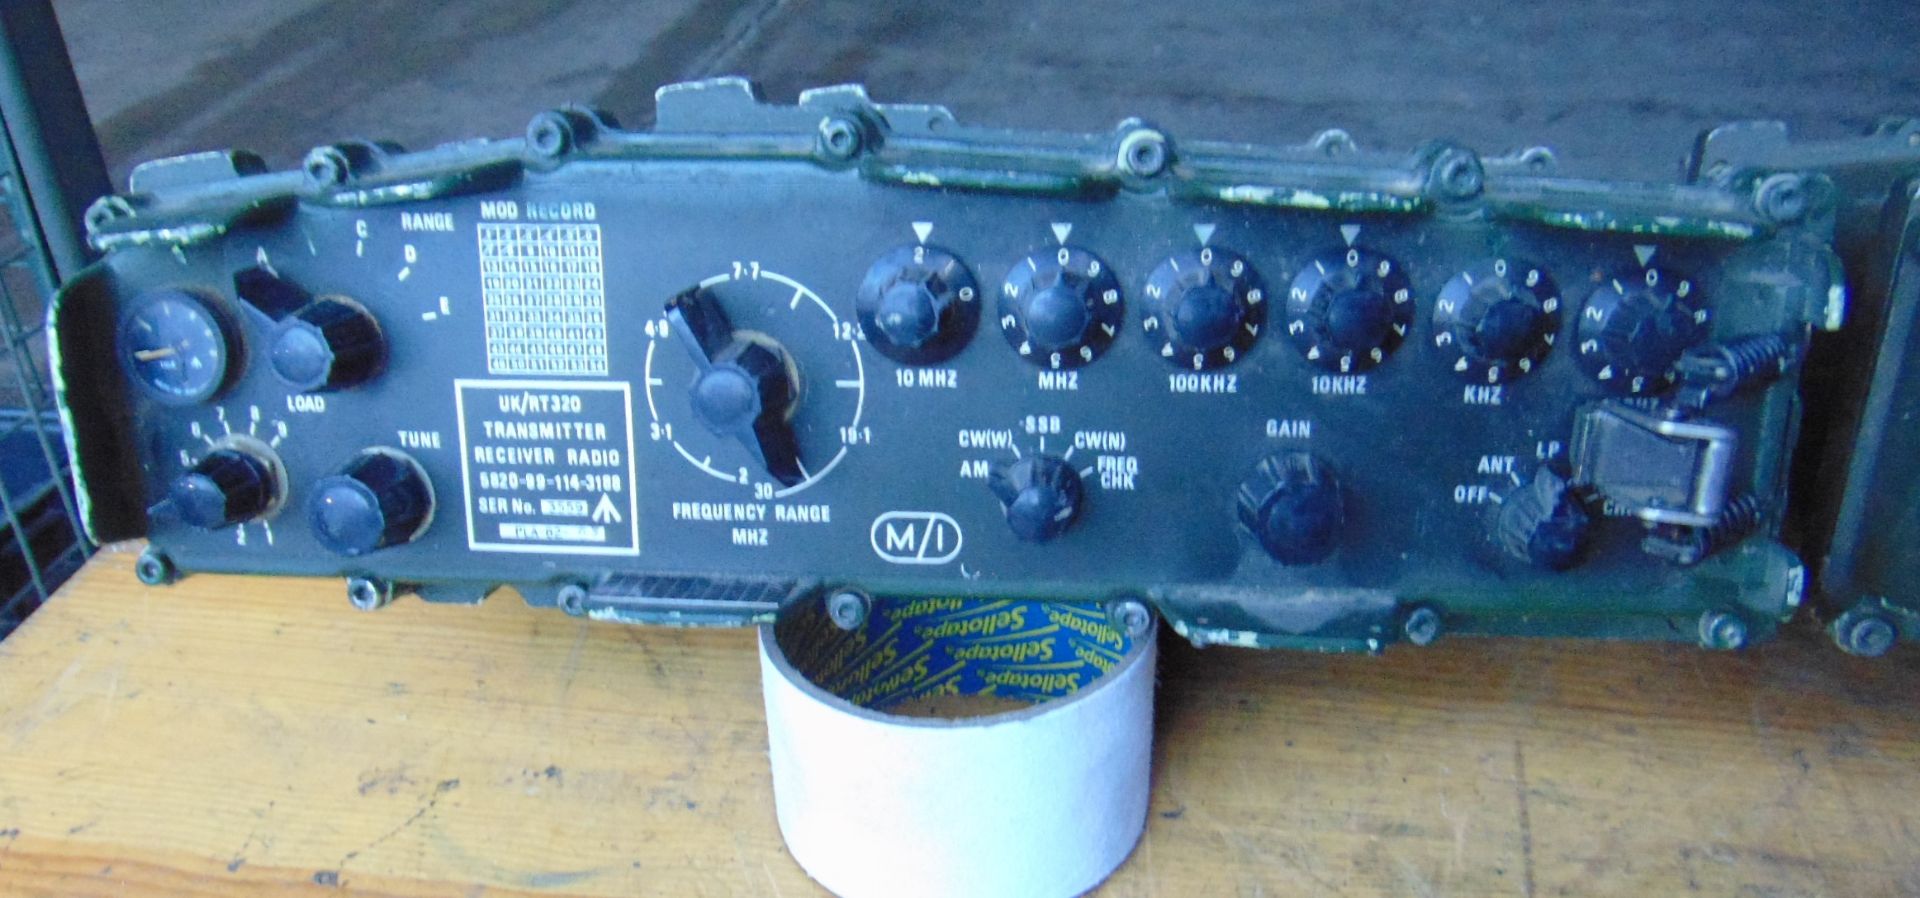 2 x Clansman UKRT 320 HF Transmitter Receivers - Image 7 of 7